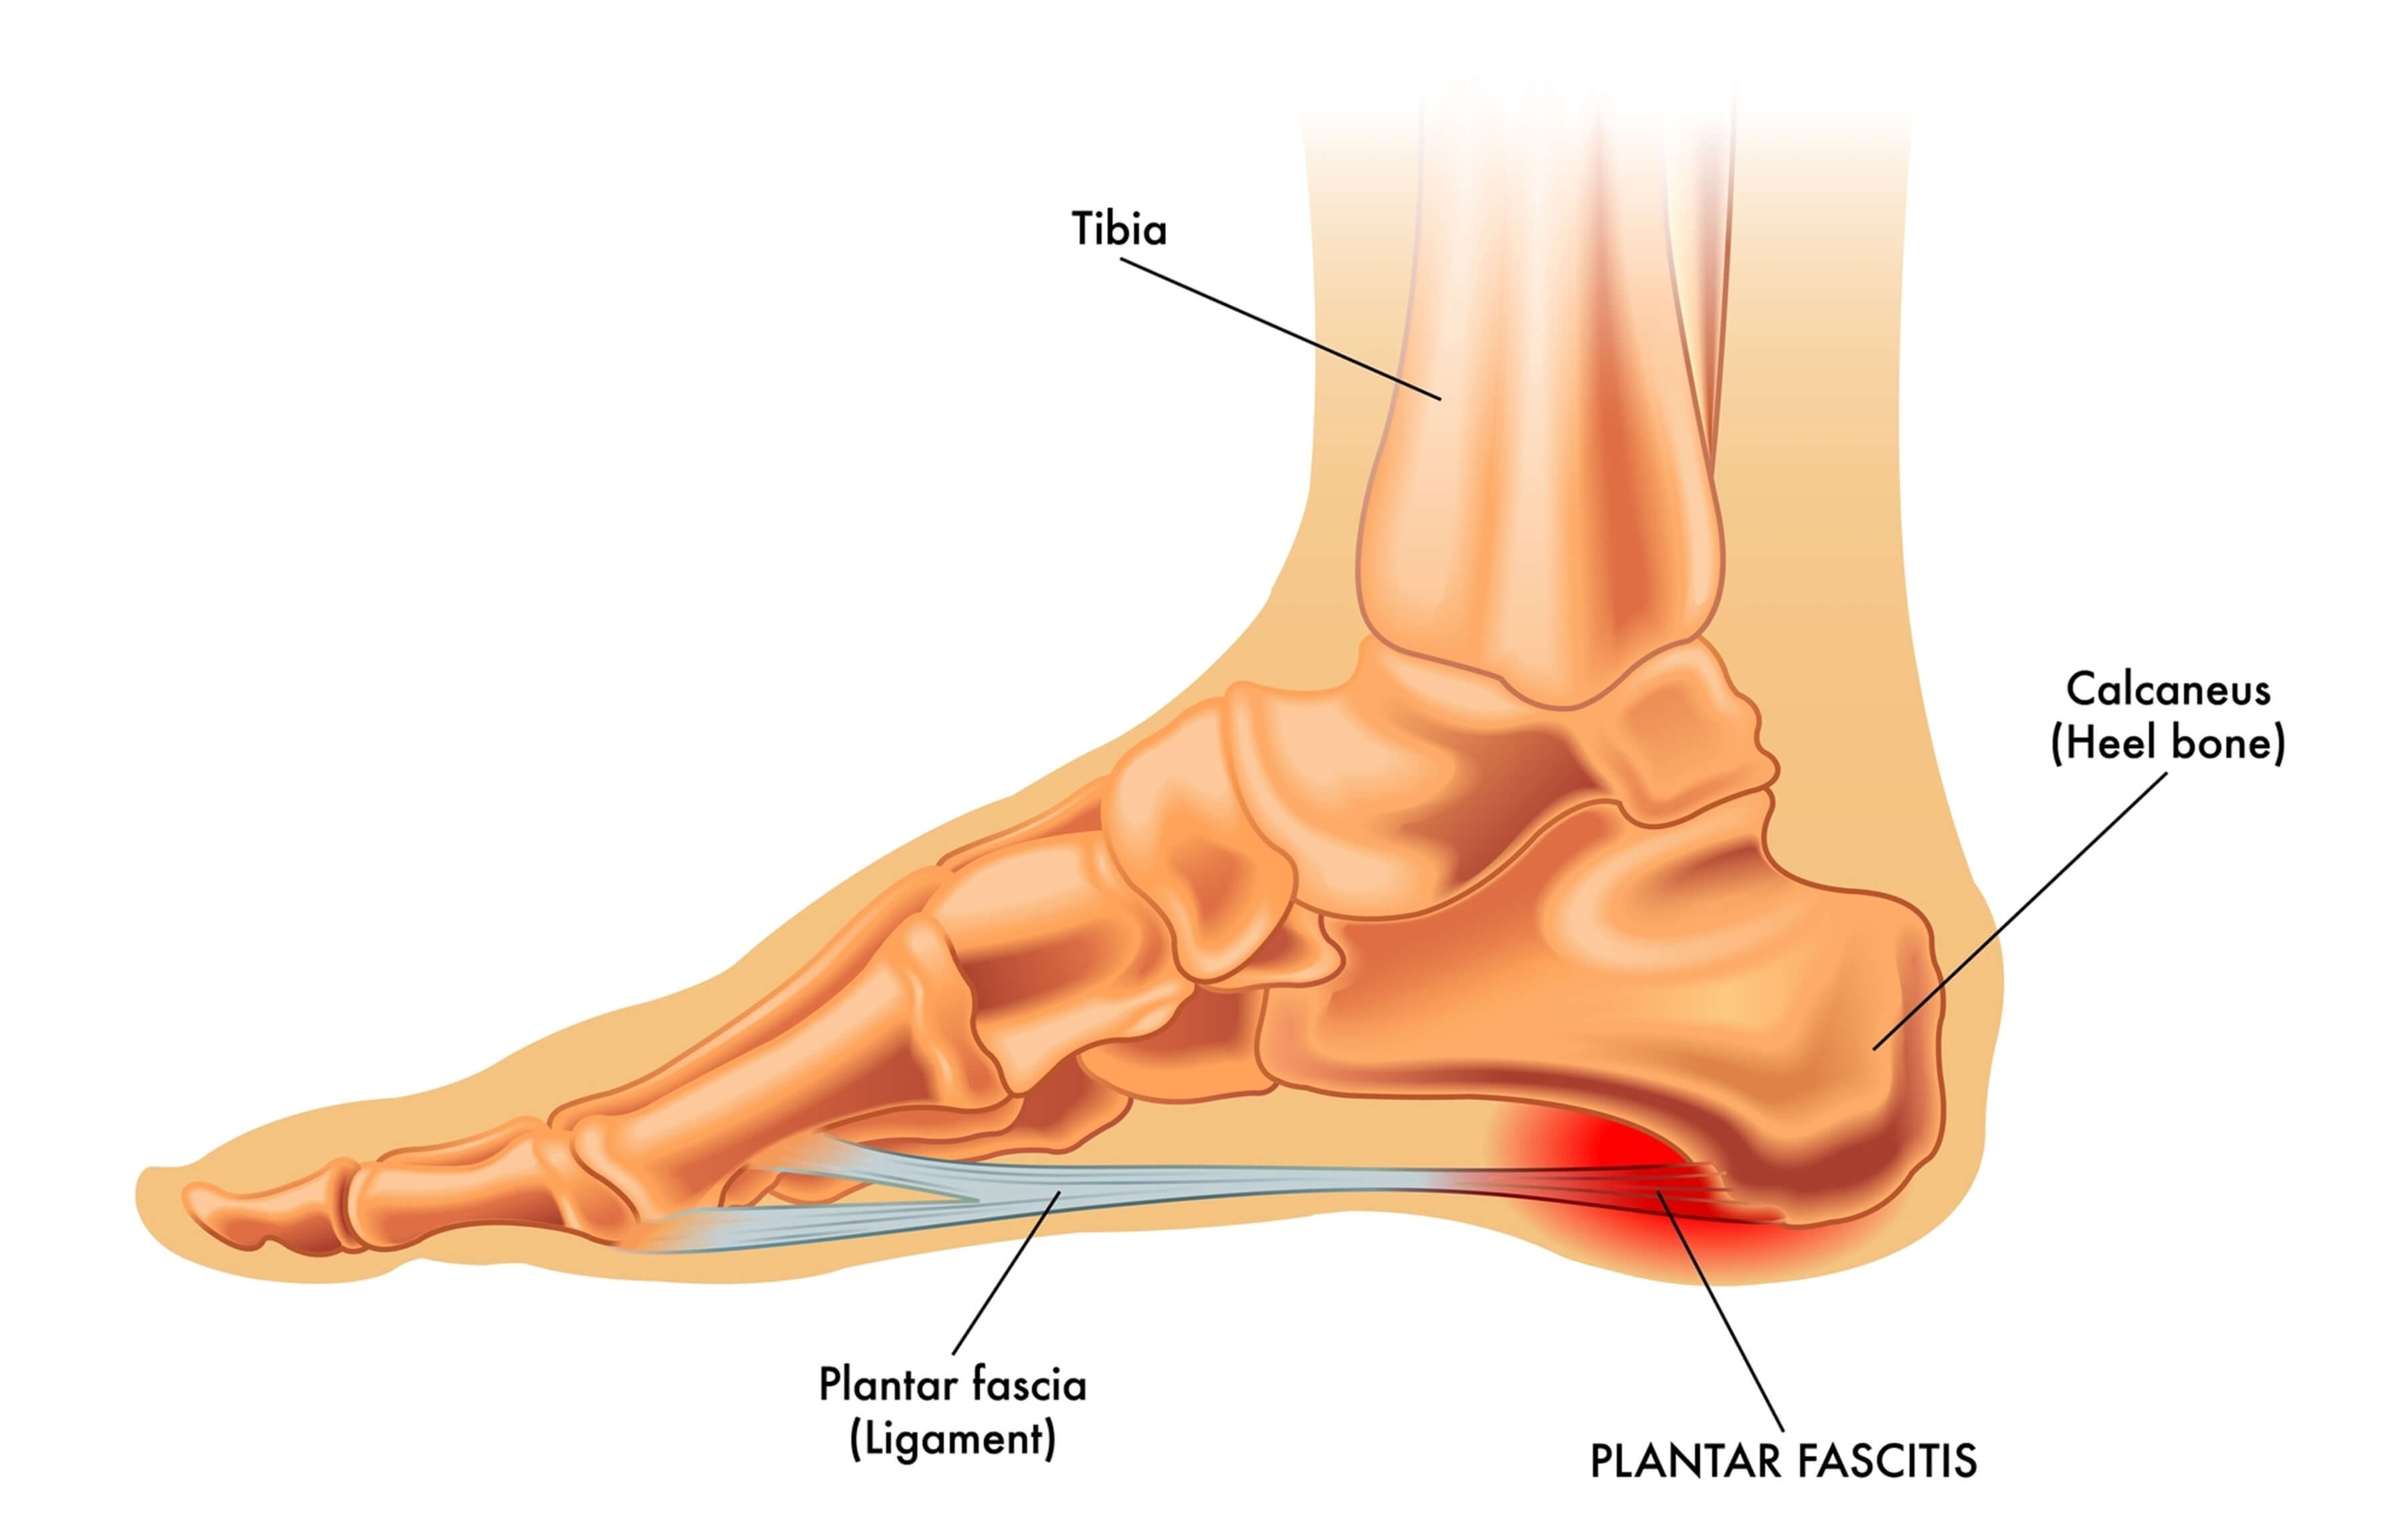 Minimal Incision Toe Bone Spur Removal